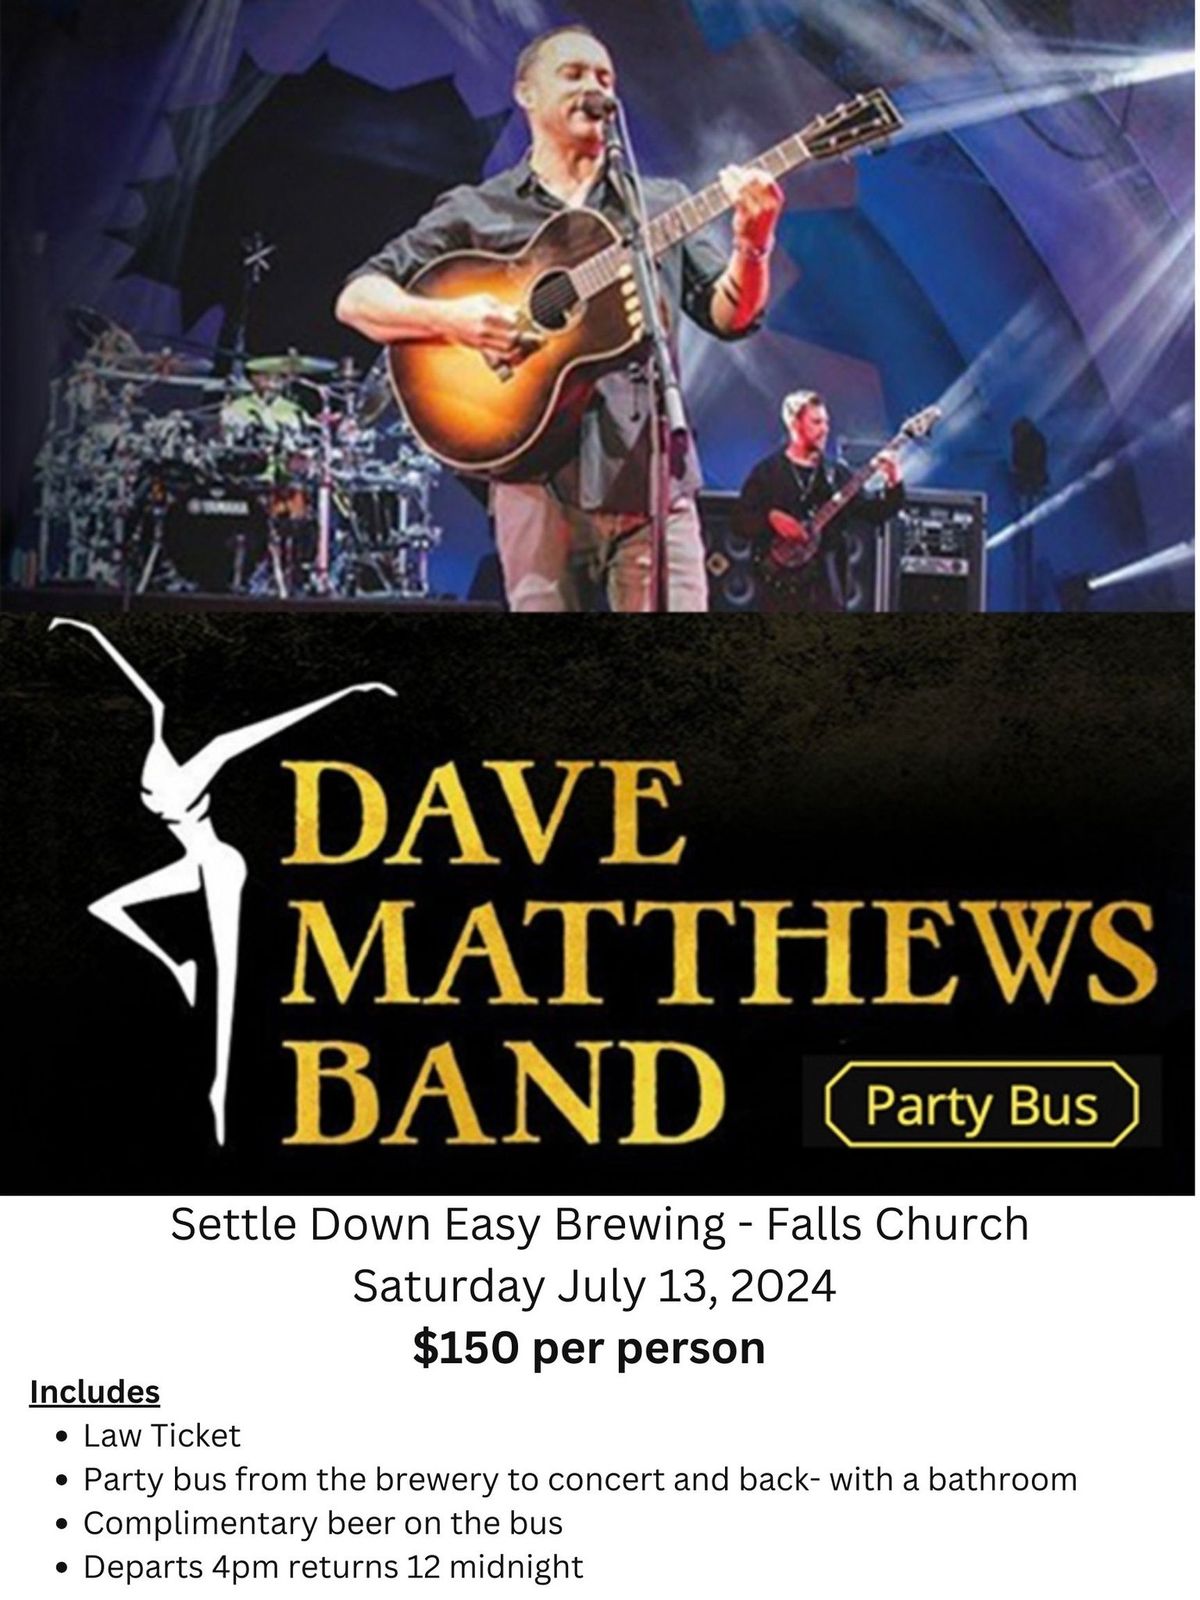 Dave Matthews Band - Party Bus 